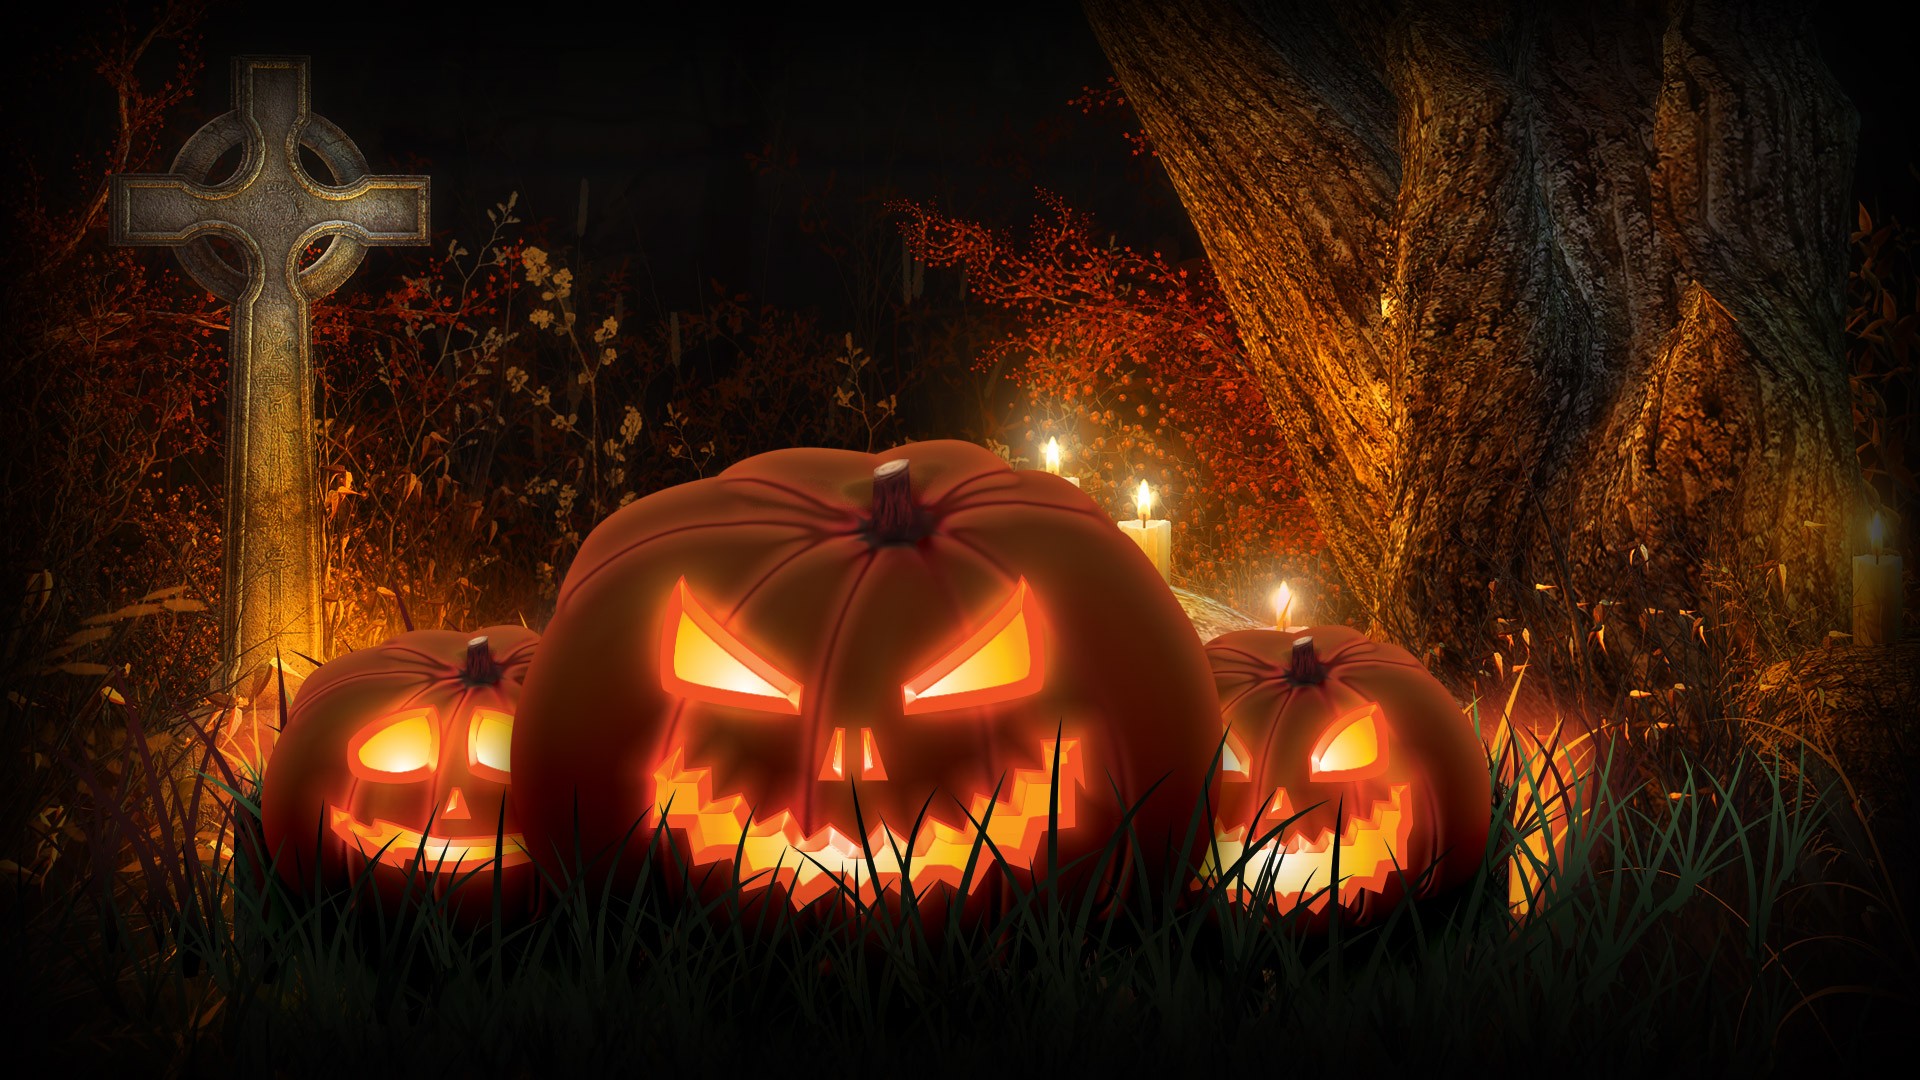 Halloween scary spooky cemetery pumpkins wallpaper 1920x1080 1920x1080